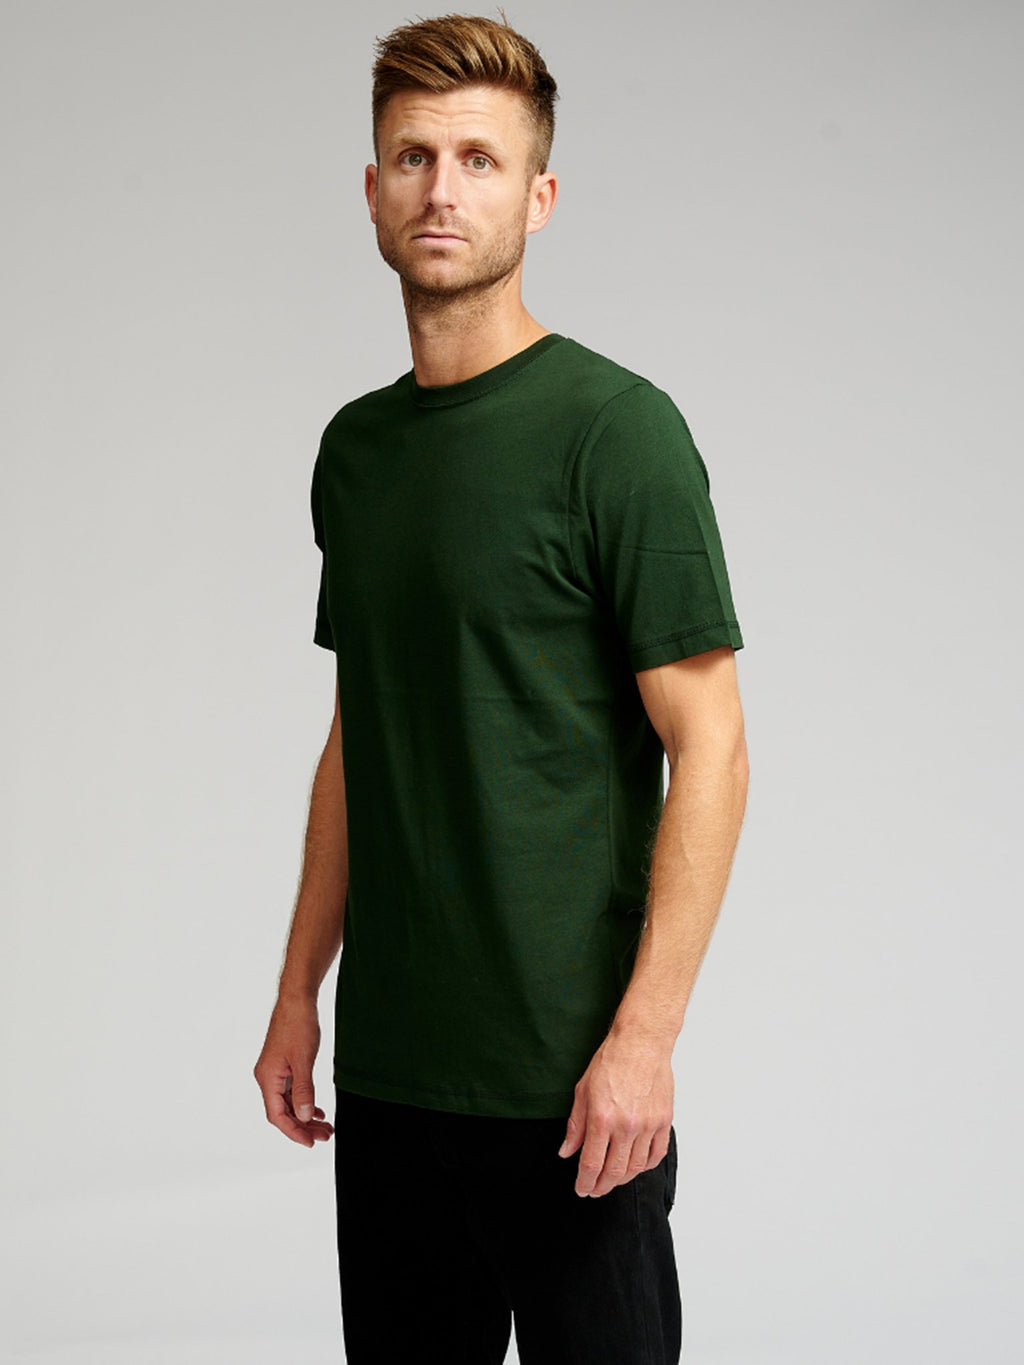 Organický Basic Tričko - tmavo zelená